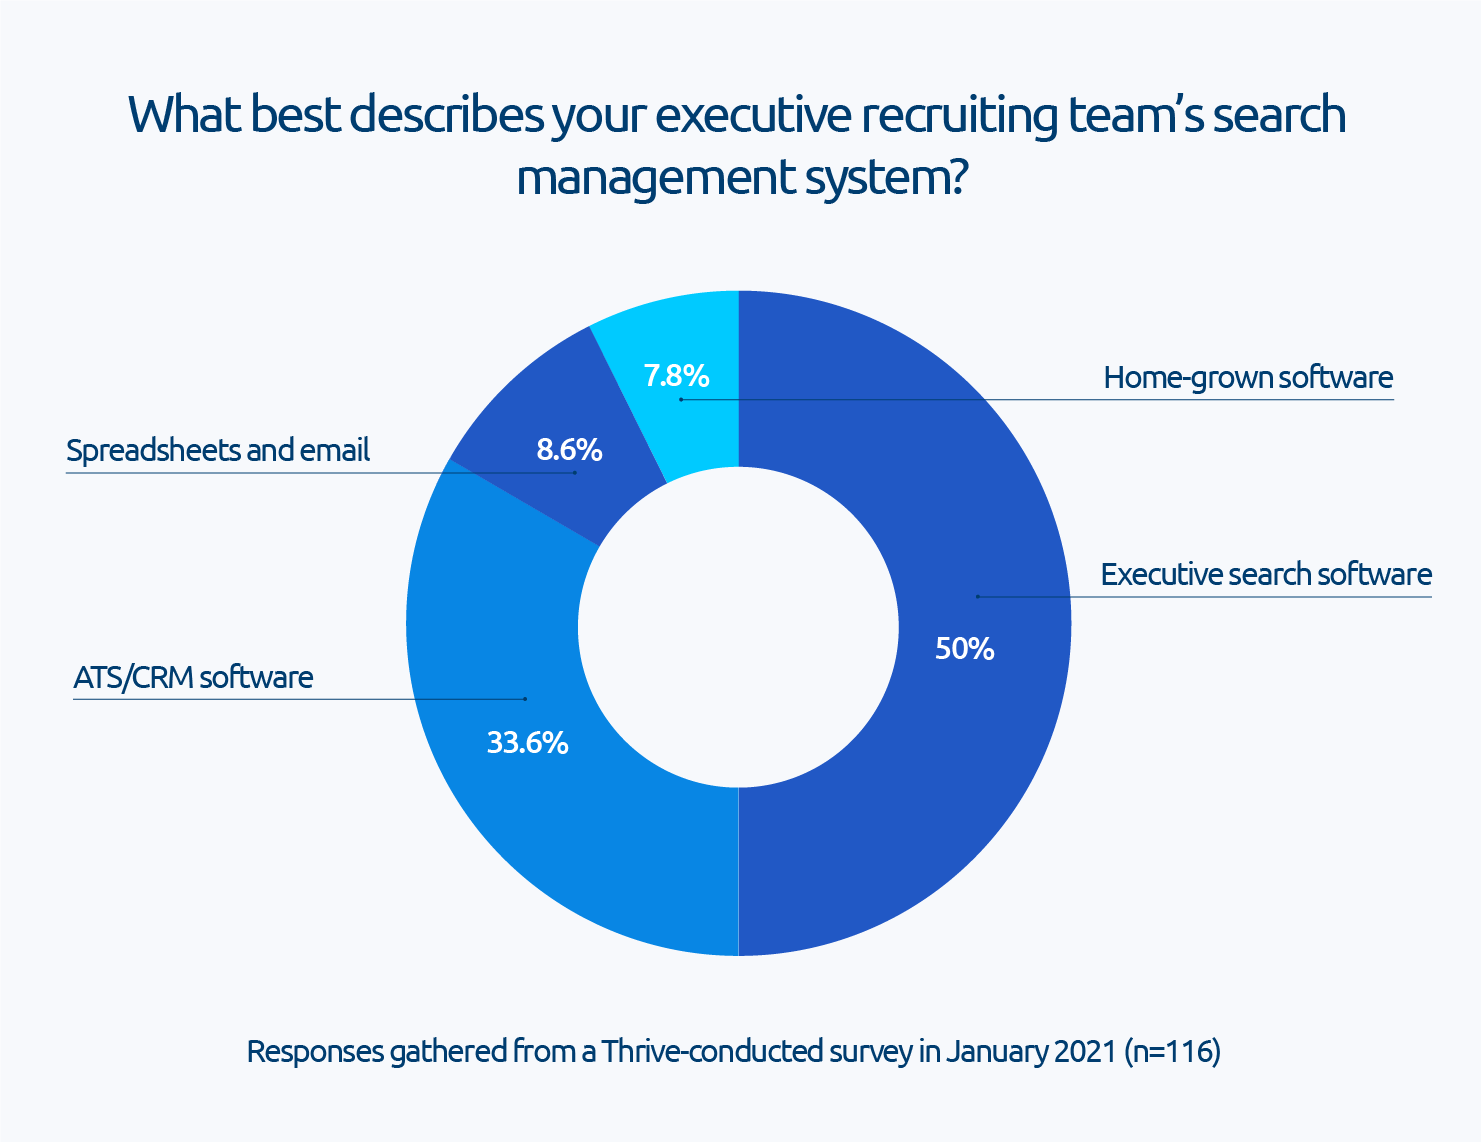 The types of software executive hiring teams use varies.